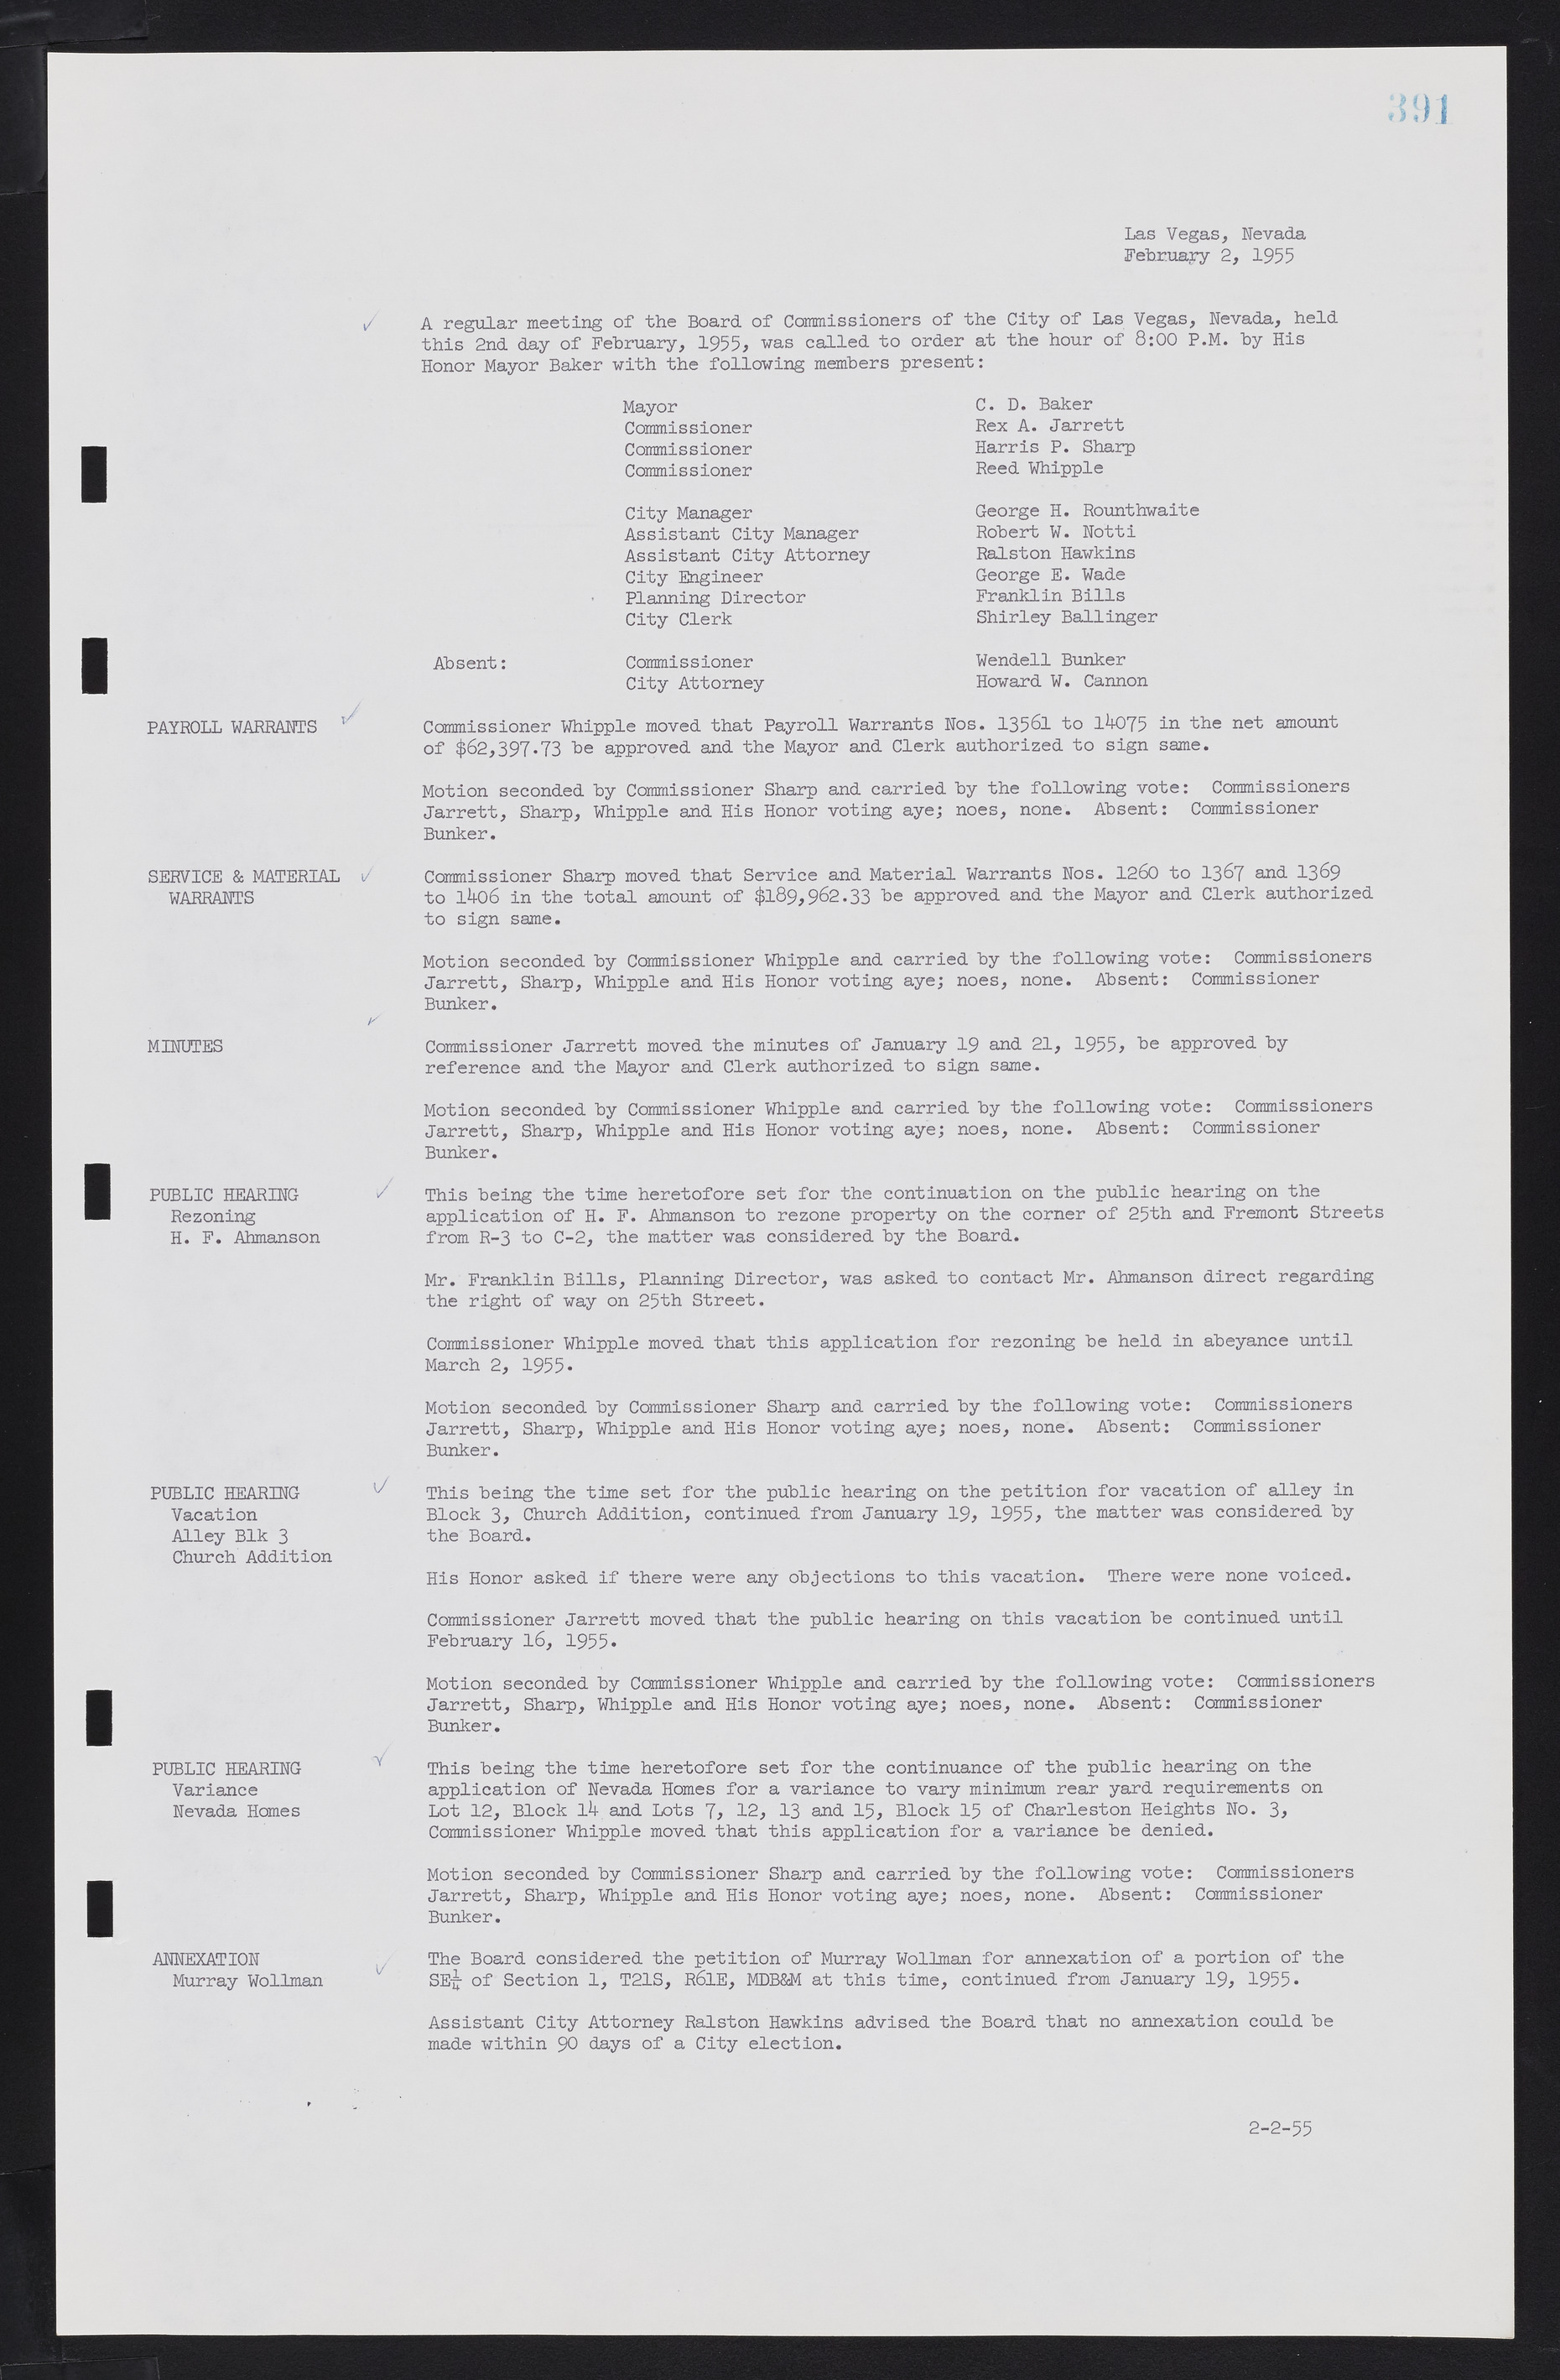 Las Vegas City Commission Minutes, February 17, 1954 to September 21, 1955, lvc000009-397